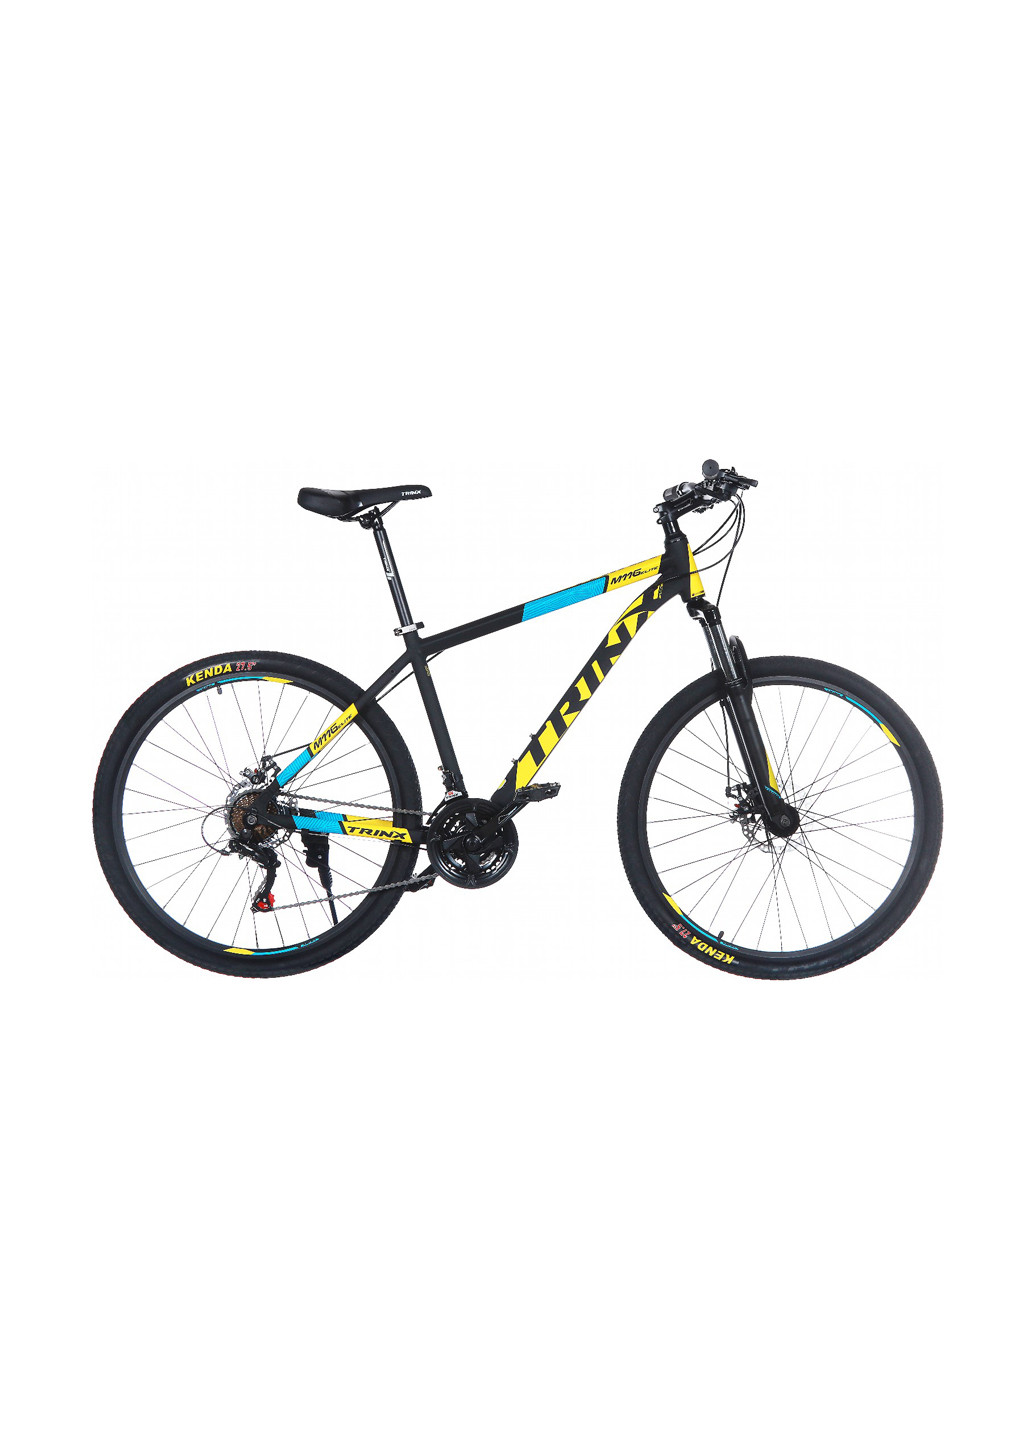 Велосипед Trinx m116elite 27.5"х18" matt-black-yellow-blue (146489525)